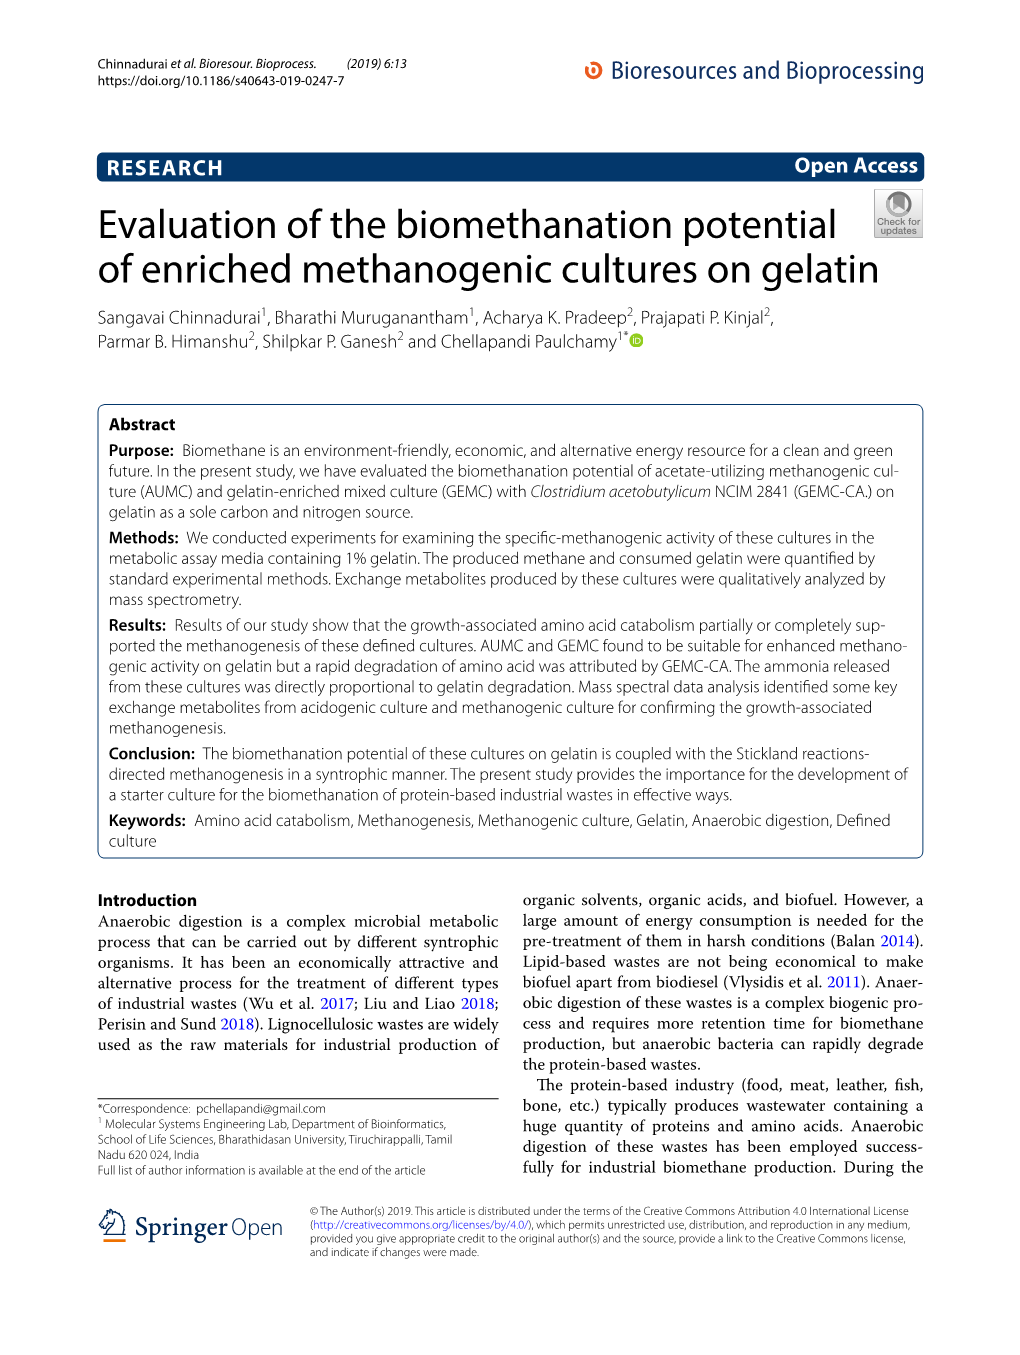 Evaluation of the Biomethanation Potential of Enriched Methanogenic Cultures on Gelatin Sangavai Chinnadurai1, Bharathi Muruganantham1, Acharya K